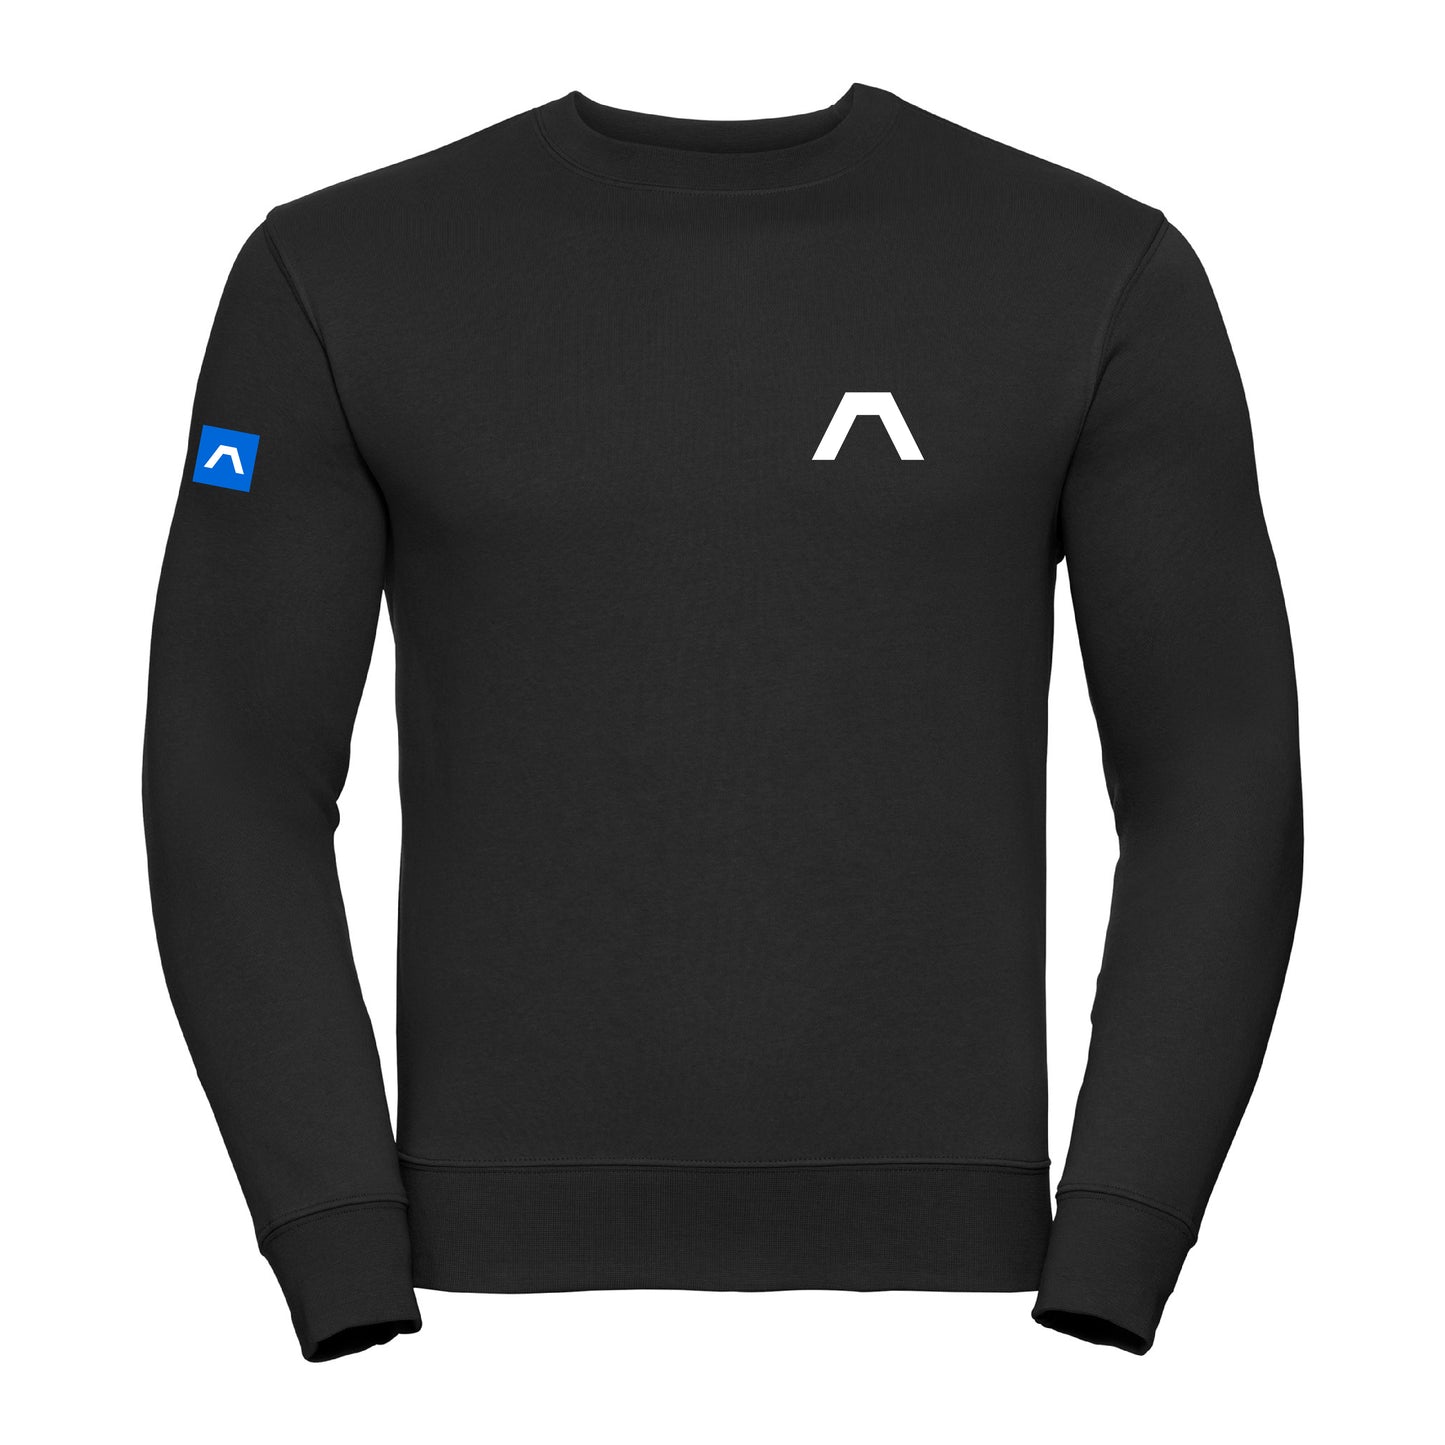 Marine Force ® Apex Sweatshirt